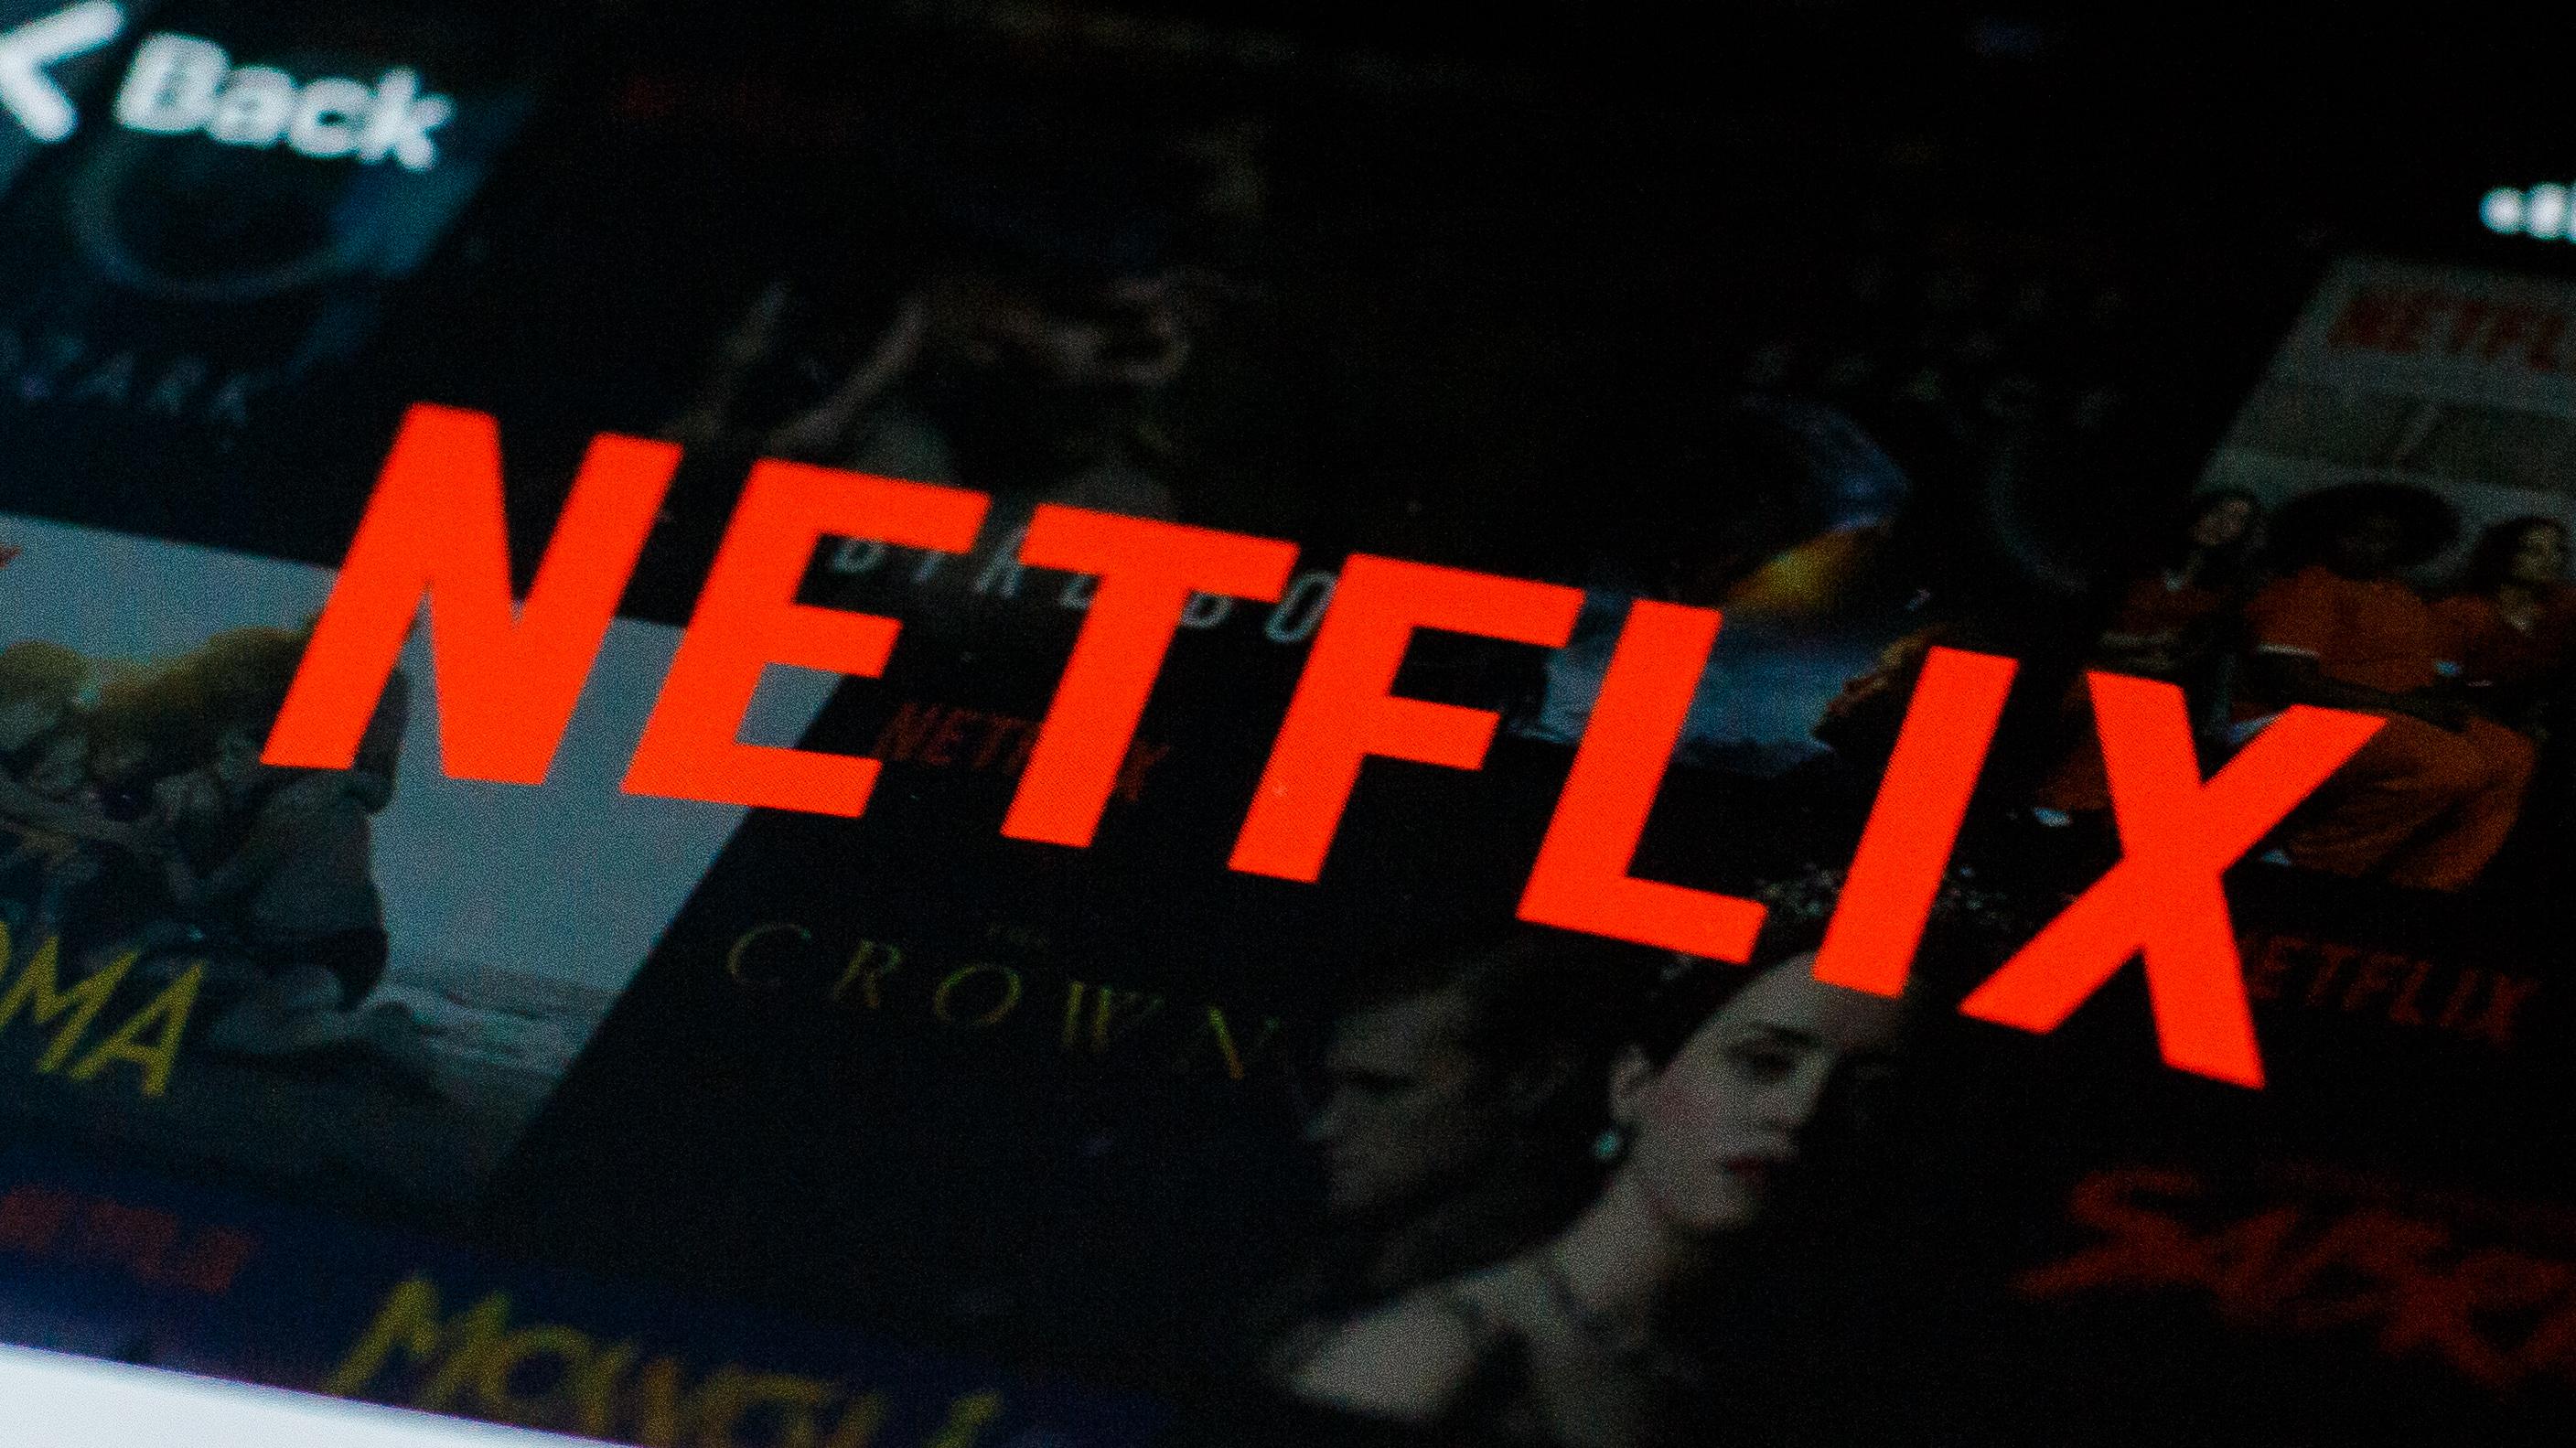 Netflix profilbild selber machen